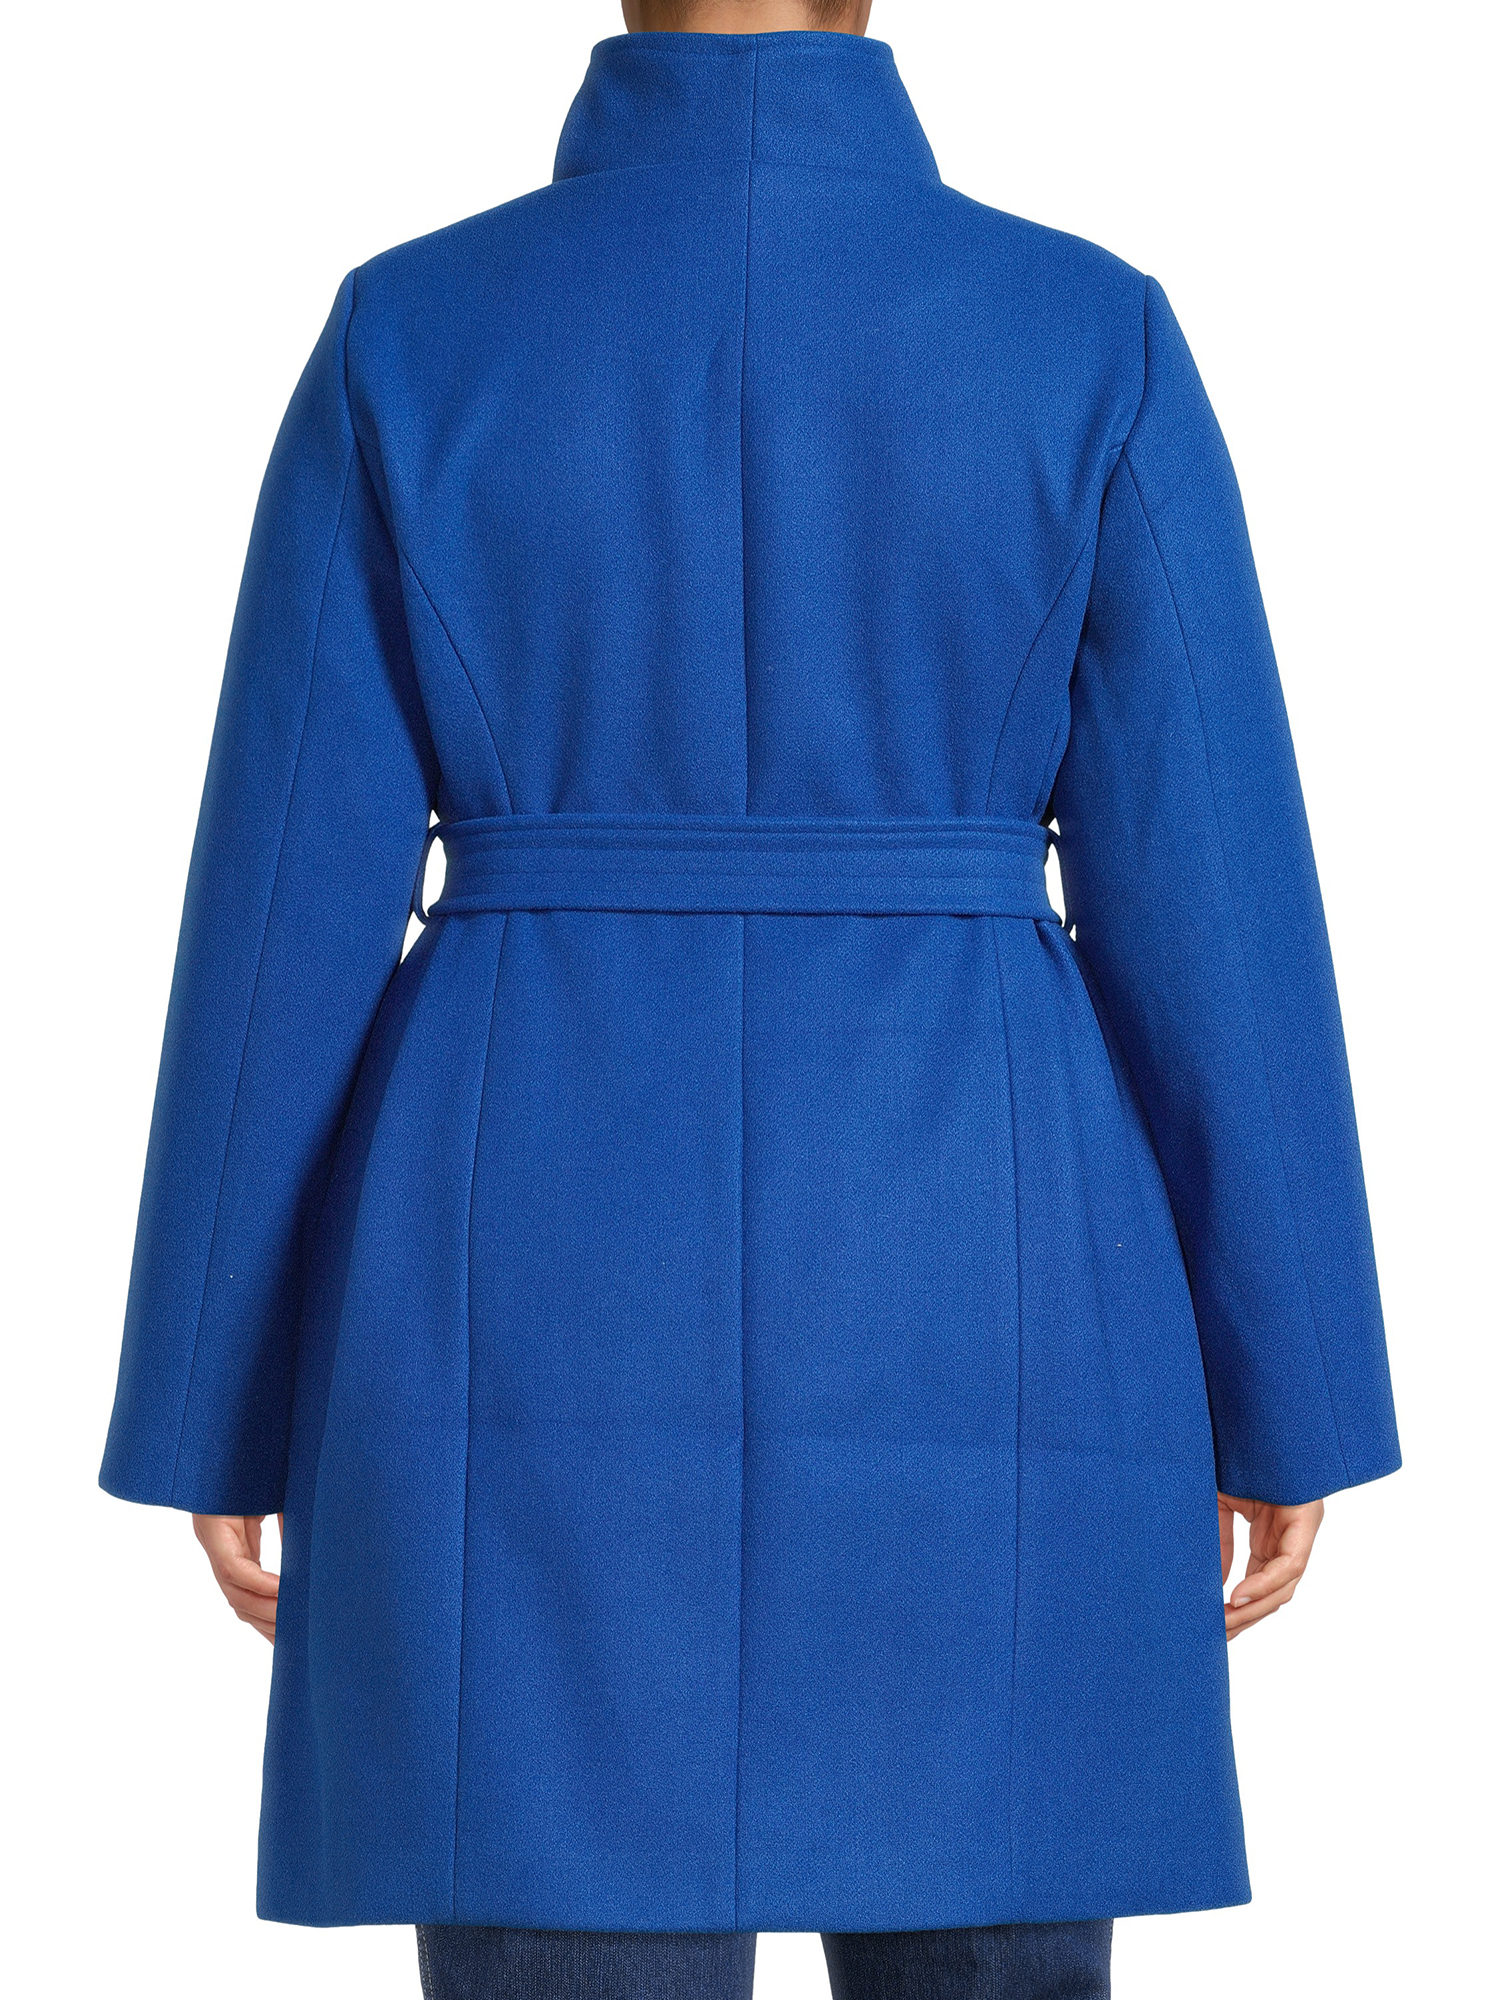 Mark Alan Women's Plus Size Asymmetrical Belted Wrap Coat - image 4 of 5